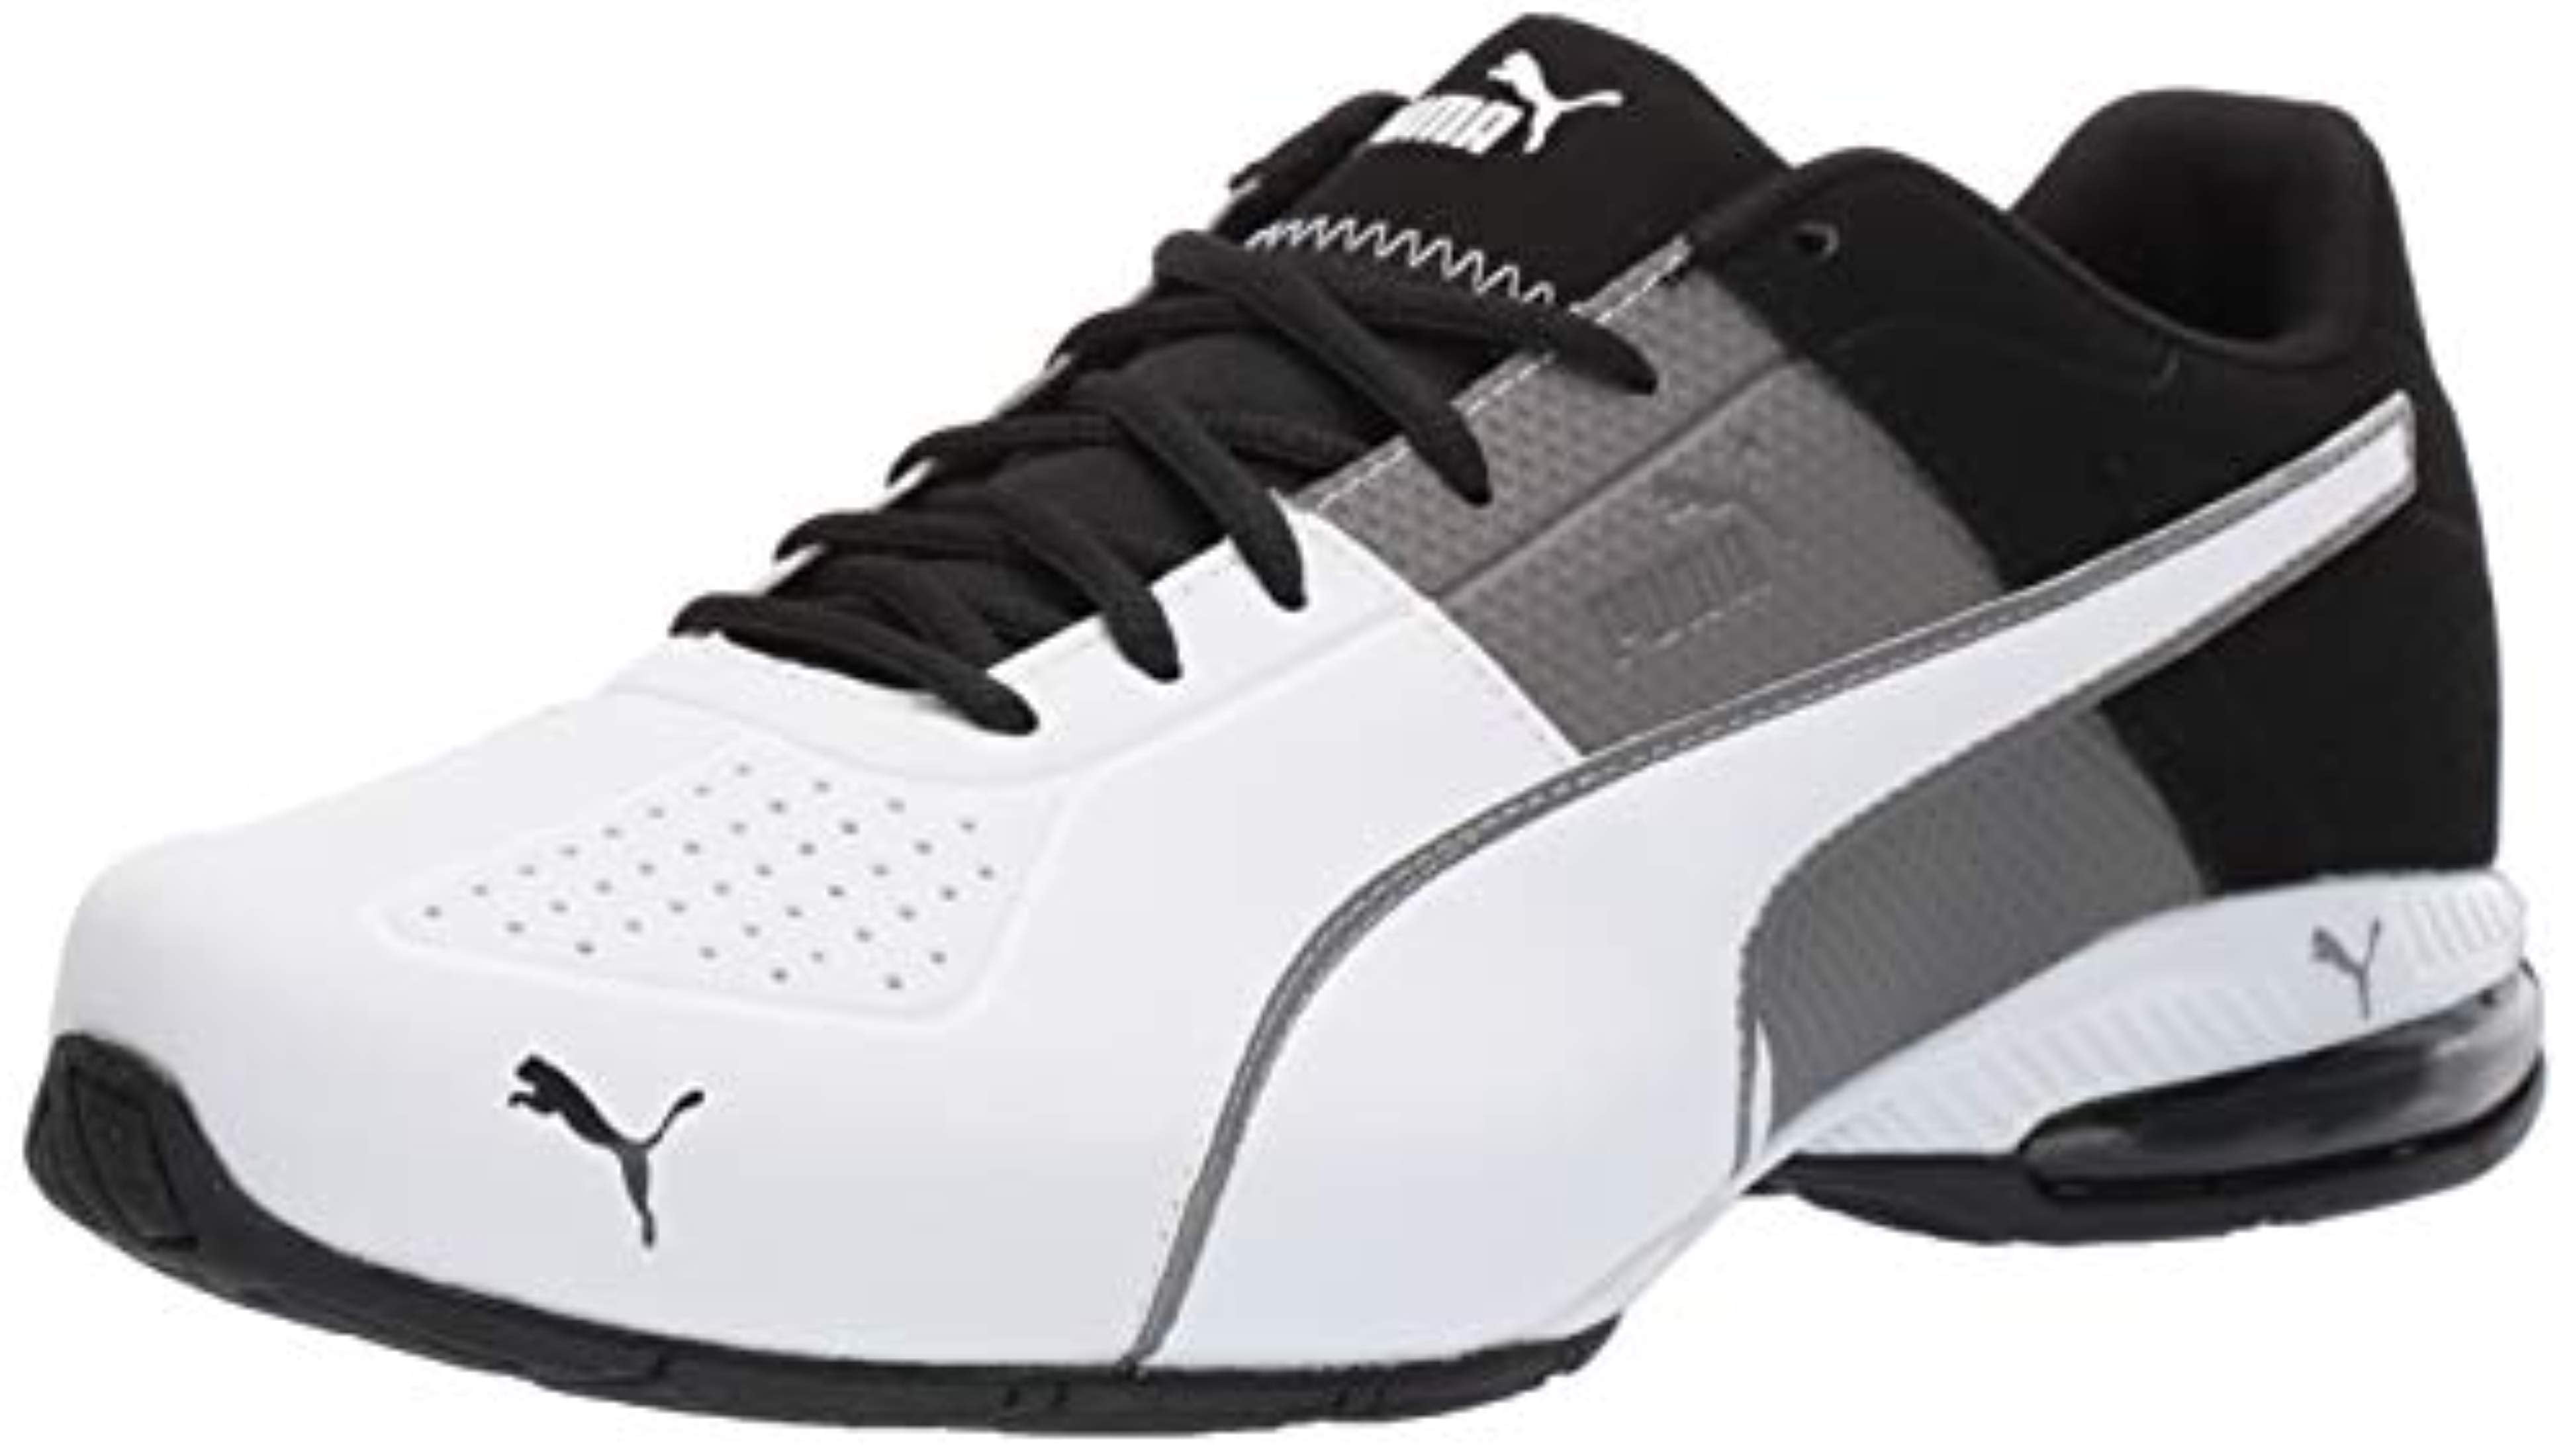 PUMA - PUMA Men's Cell Surin Sneaker, Charcoal Gray White, 9 M US ...